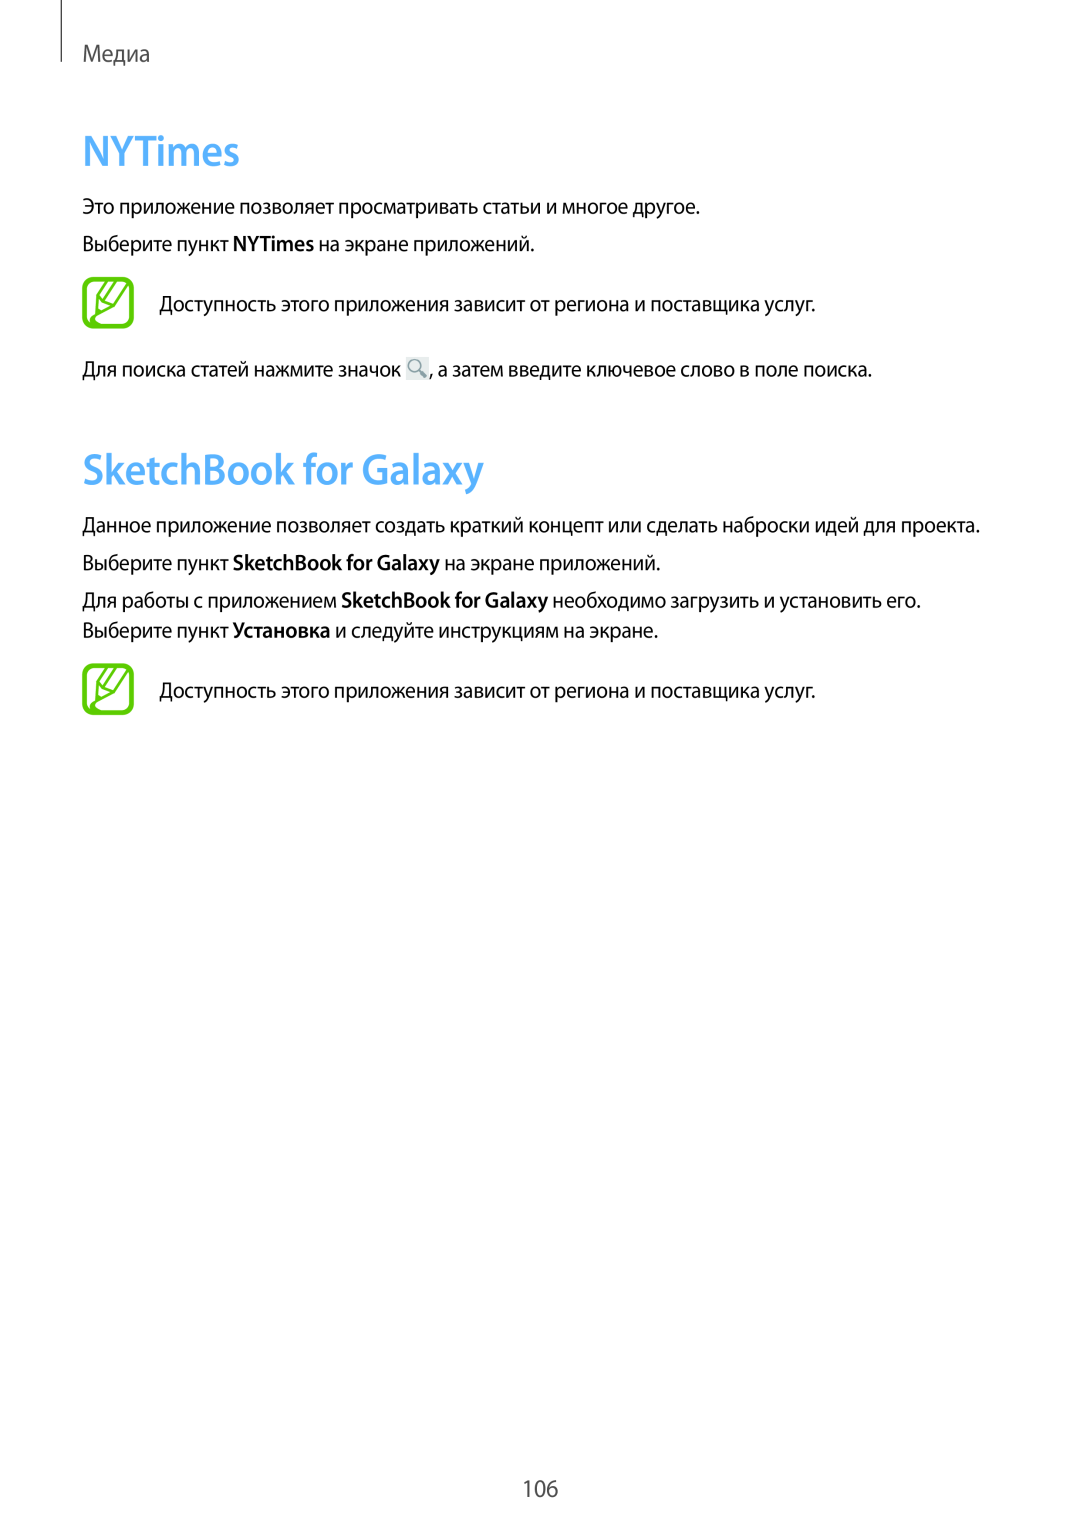 Samsung SM-P9000ZWASER, SM-P9000ZKASEB, SM-P9000ZWASEB, SM-P9000ZKASER manual NYTimes, SketchBook for Galaxy, Медиа 